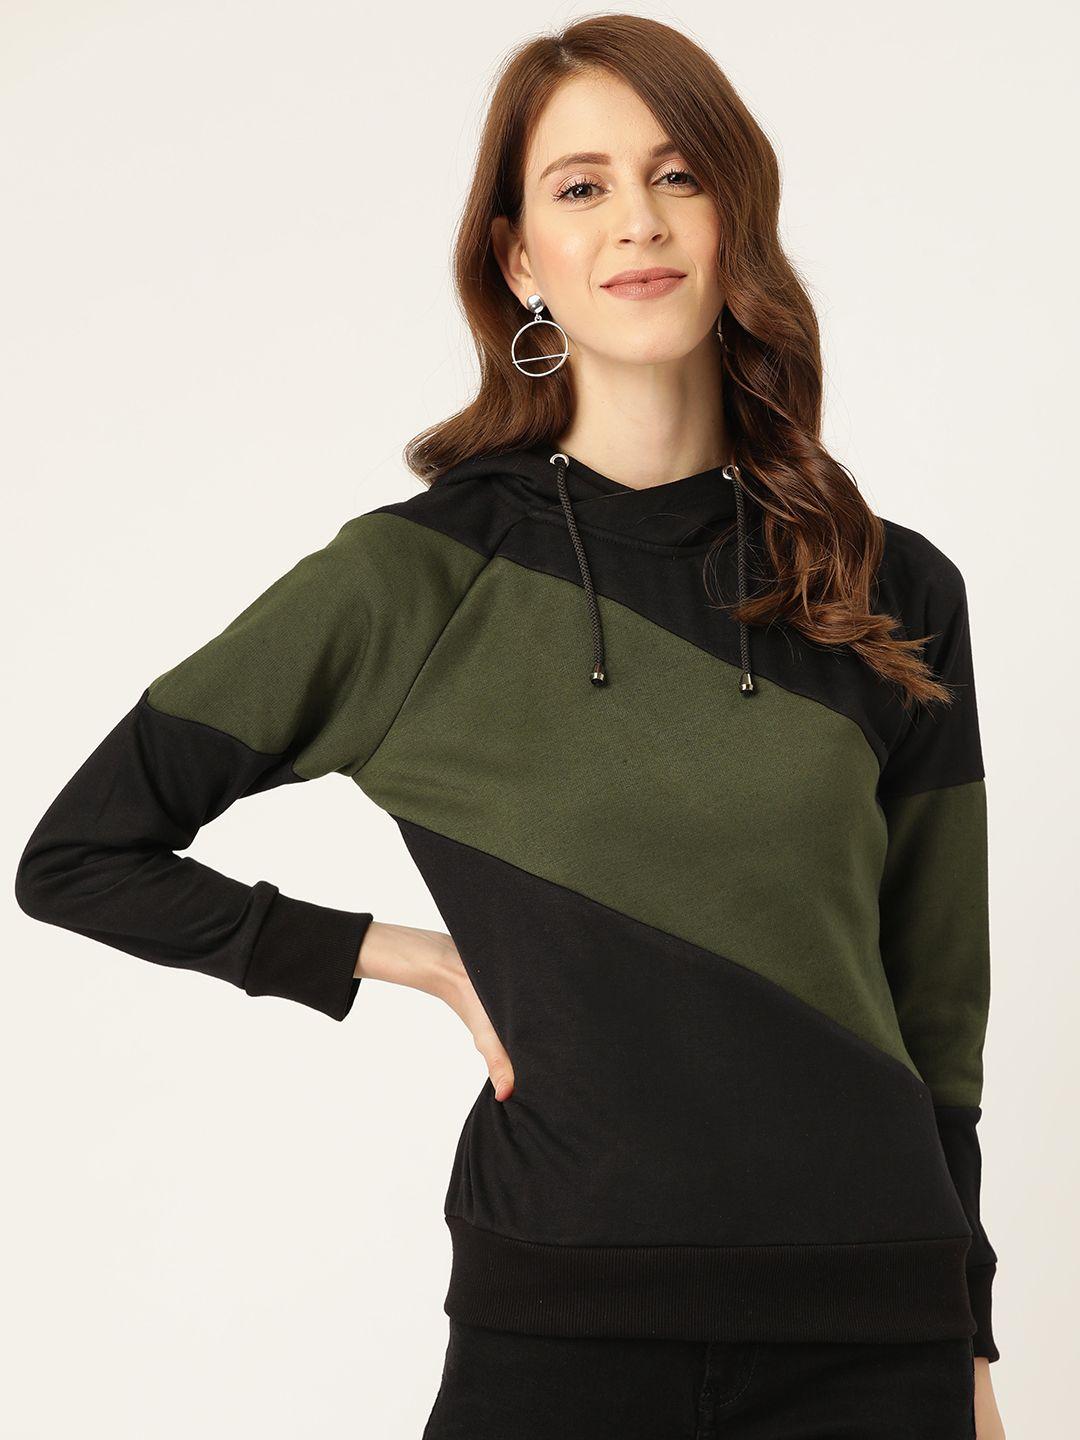 alsace lorraine paris women black & olive green colourblocked hooded sweatshirt